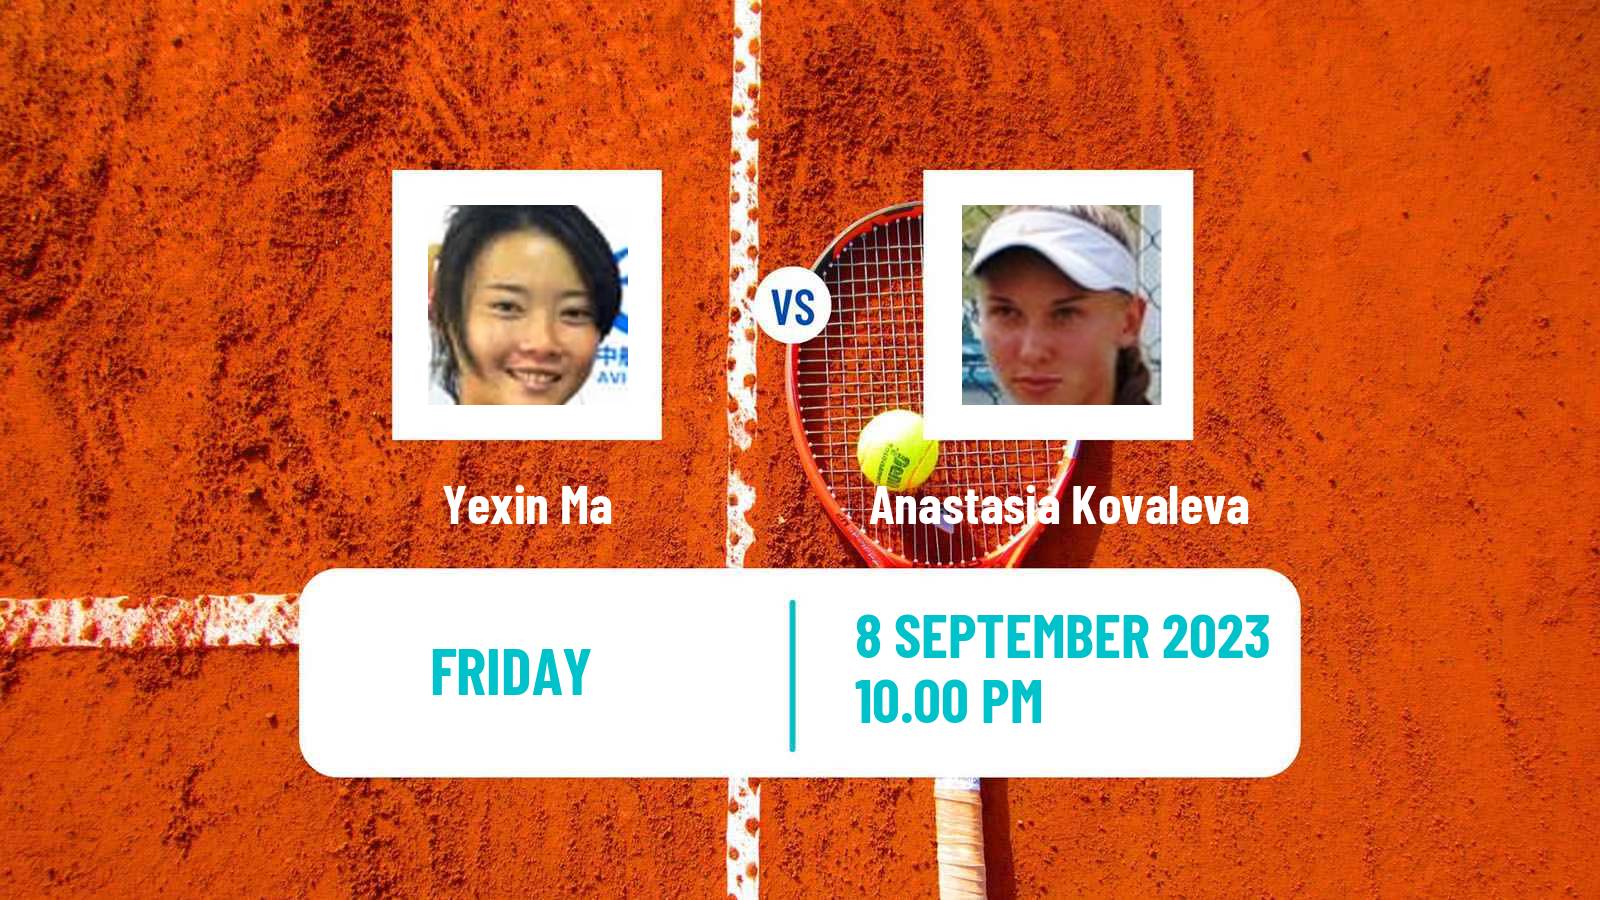 Tennis ITF W25 Nakhon Si Thammarat 4 Women Yexin Ma - Anastasia Kovaleva